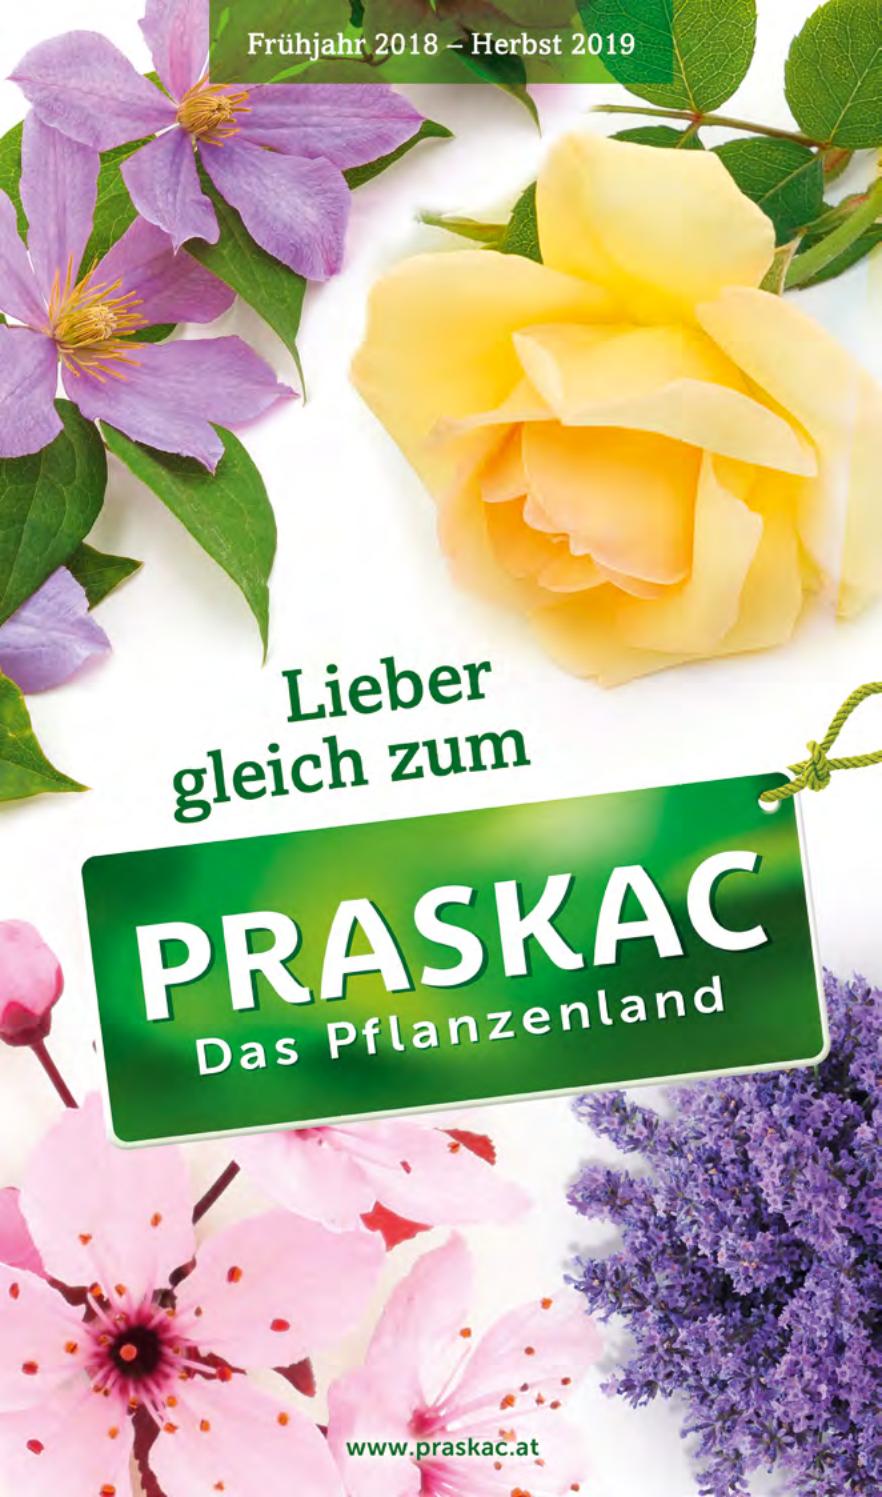 Gartenberatung Neu Katalog 2018 2019 by Praskac Pflanzenland issuu